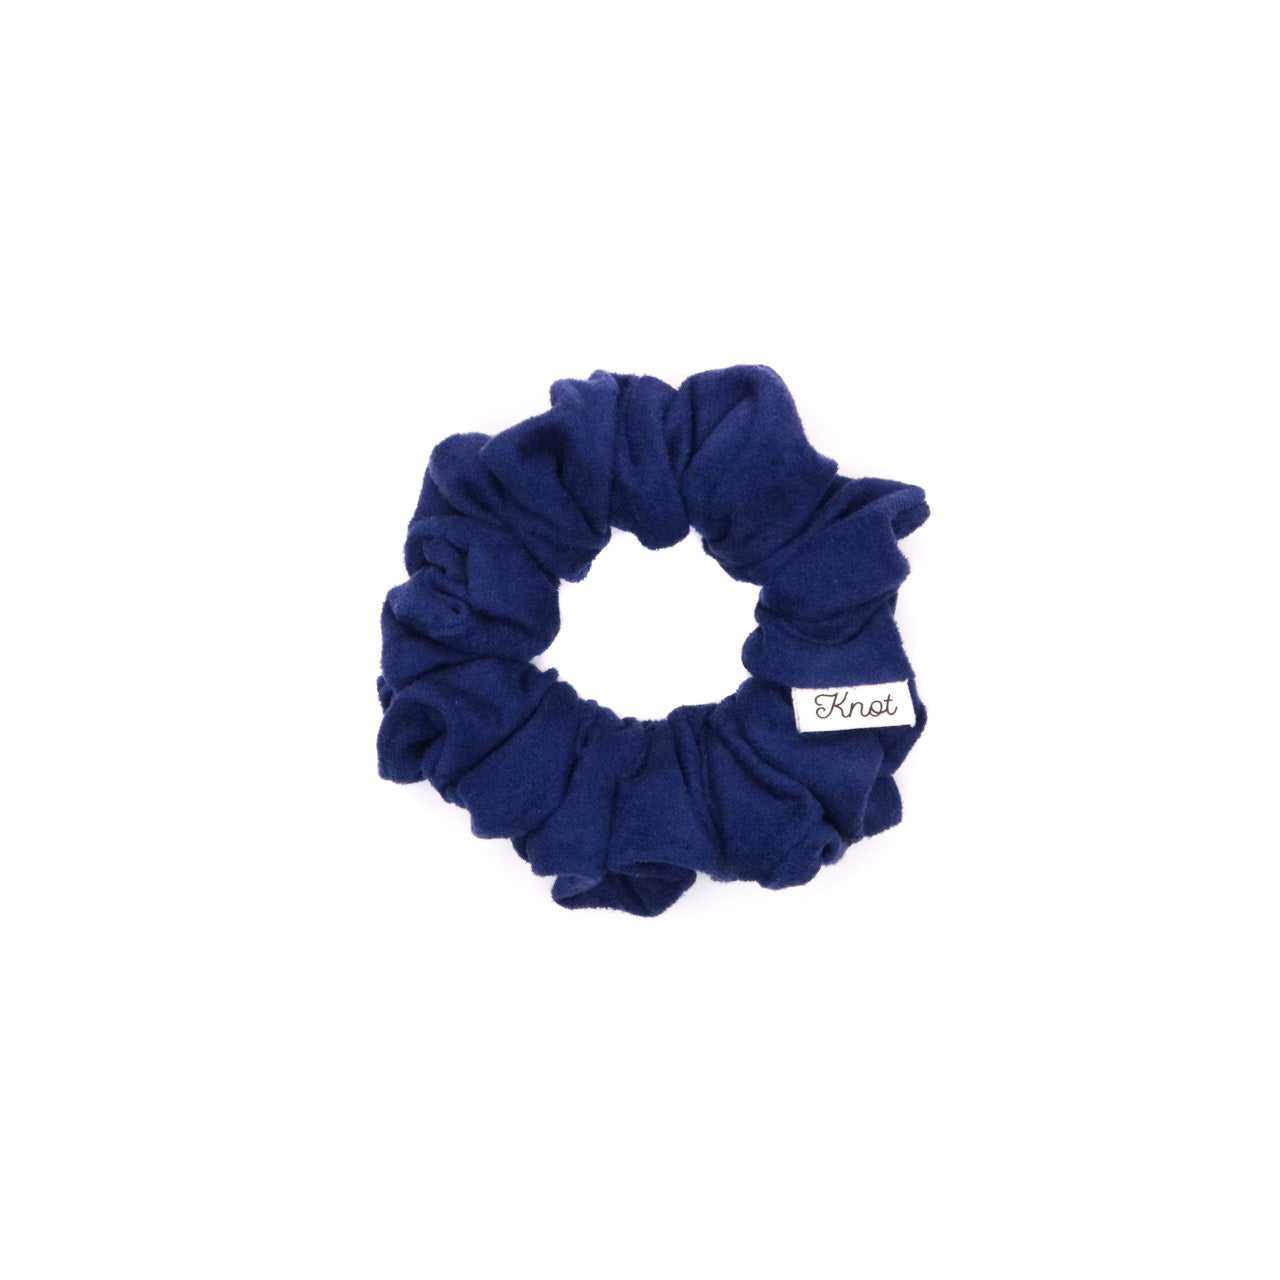 The Knot Shop Hair Scrunchie Blue Suede